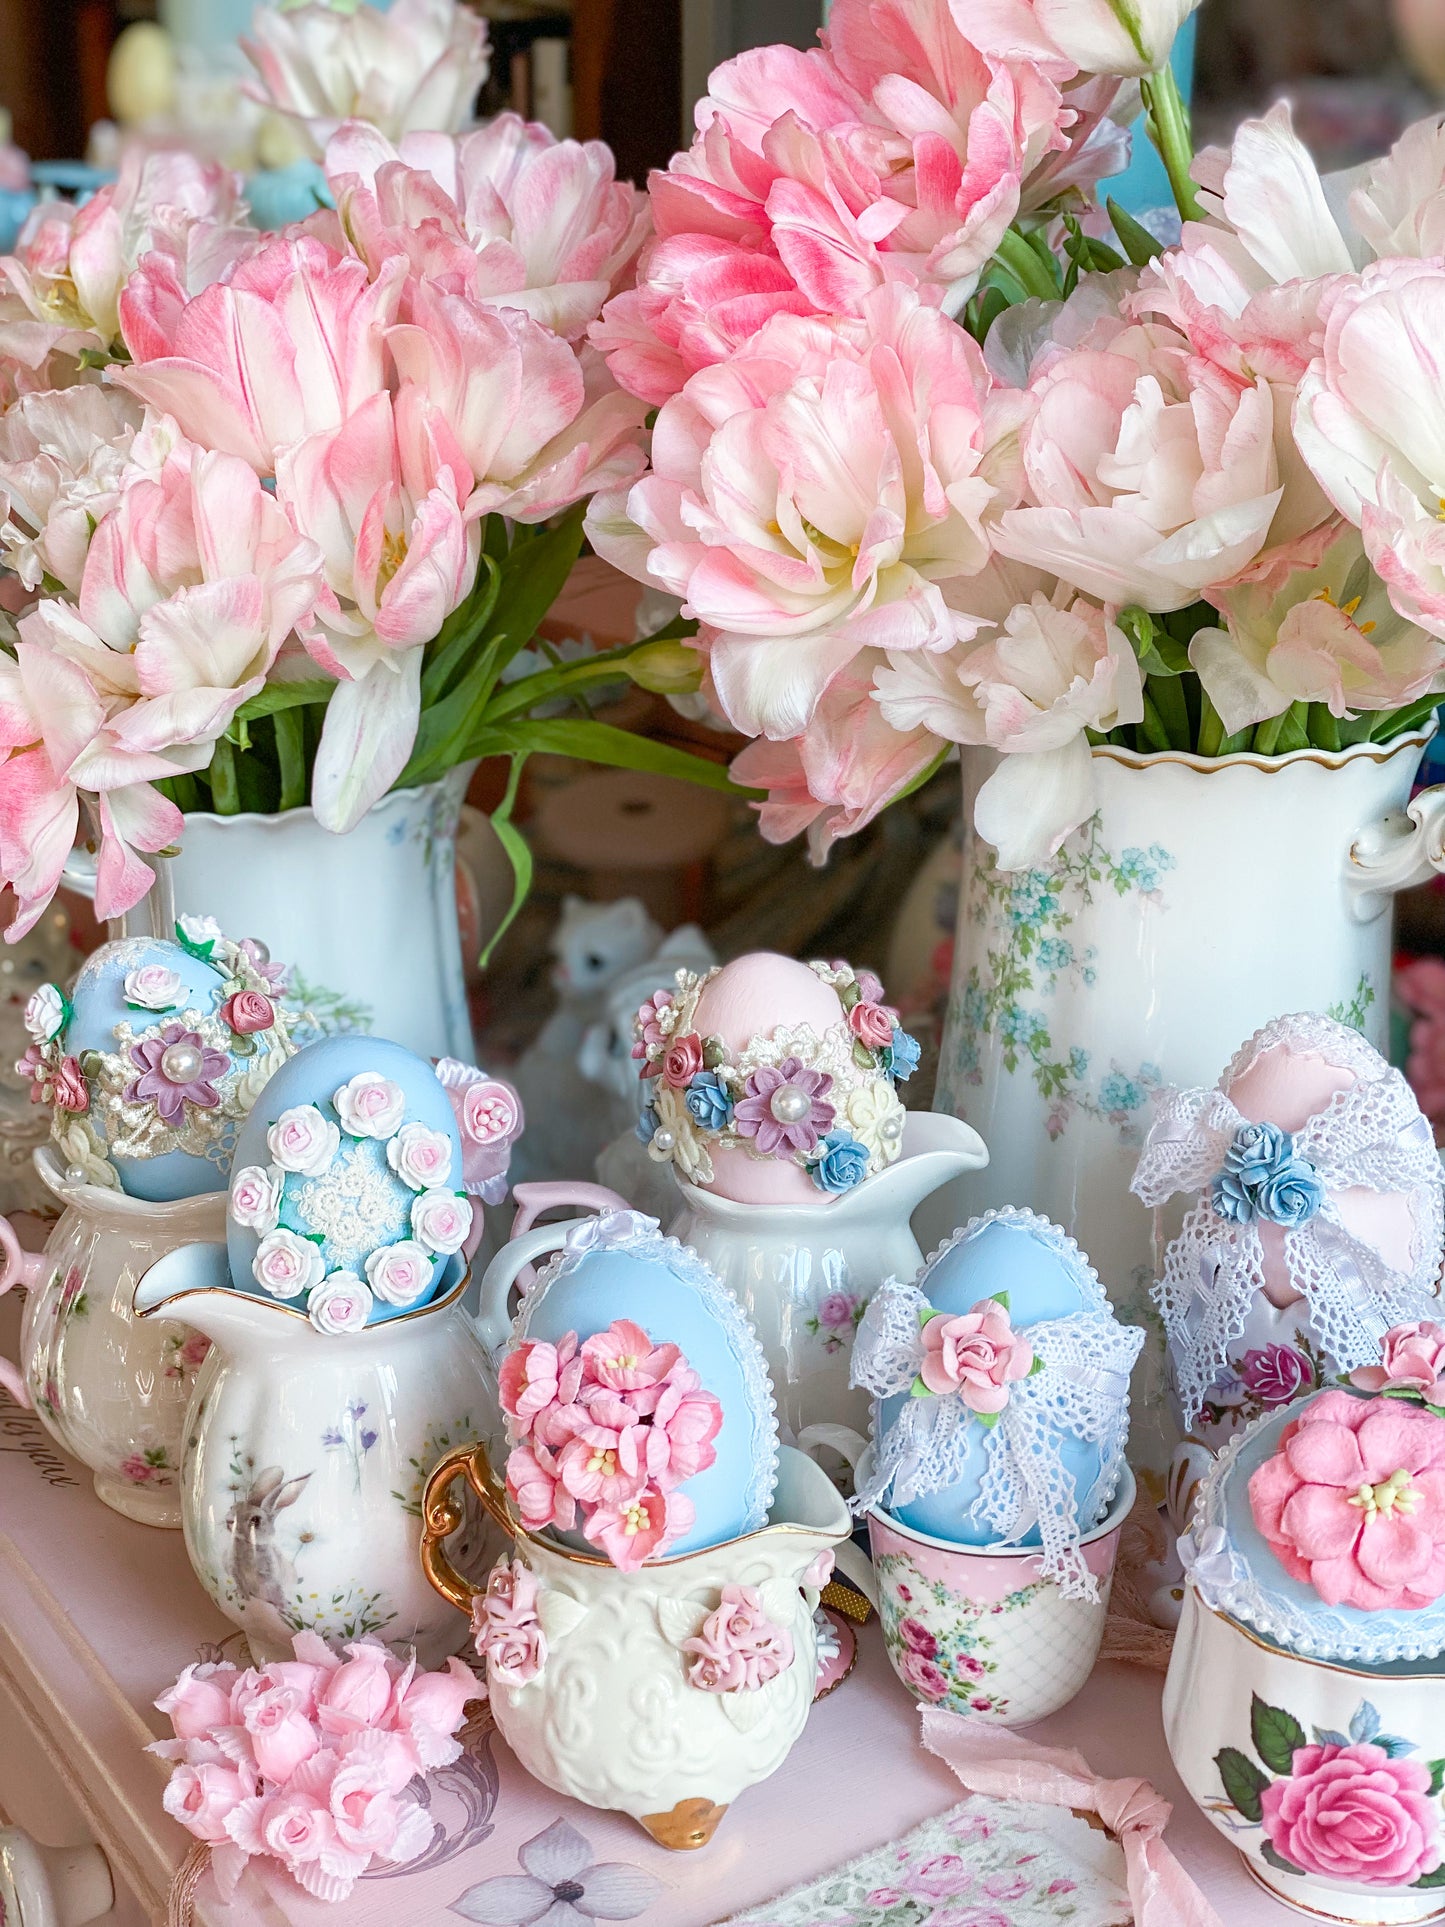 Set of 12 Handmade Pastel Pink and Blue Floral Easter Egg Bowl Sitters